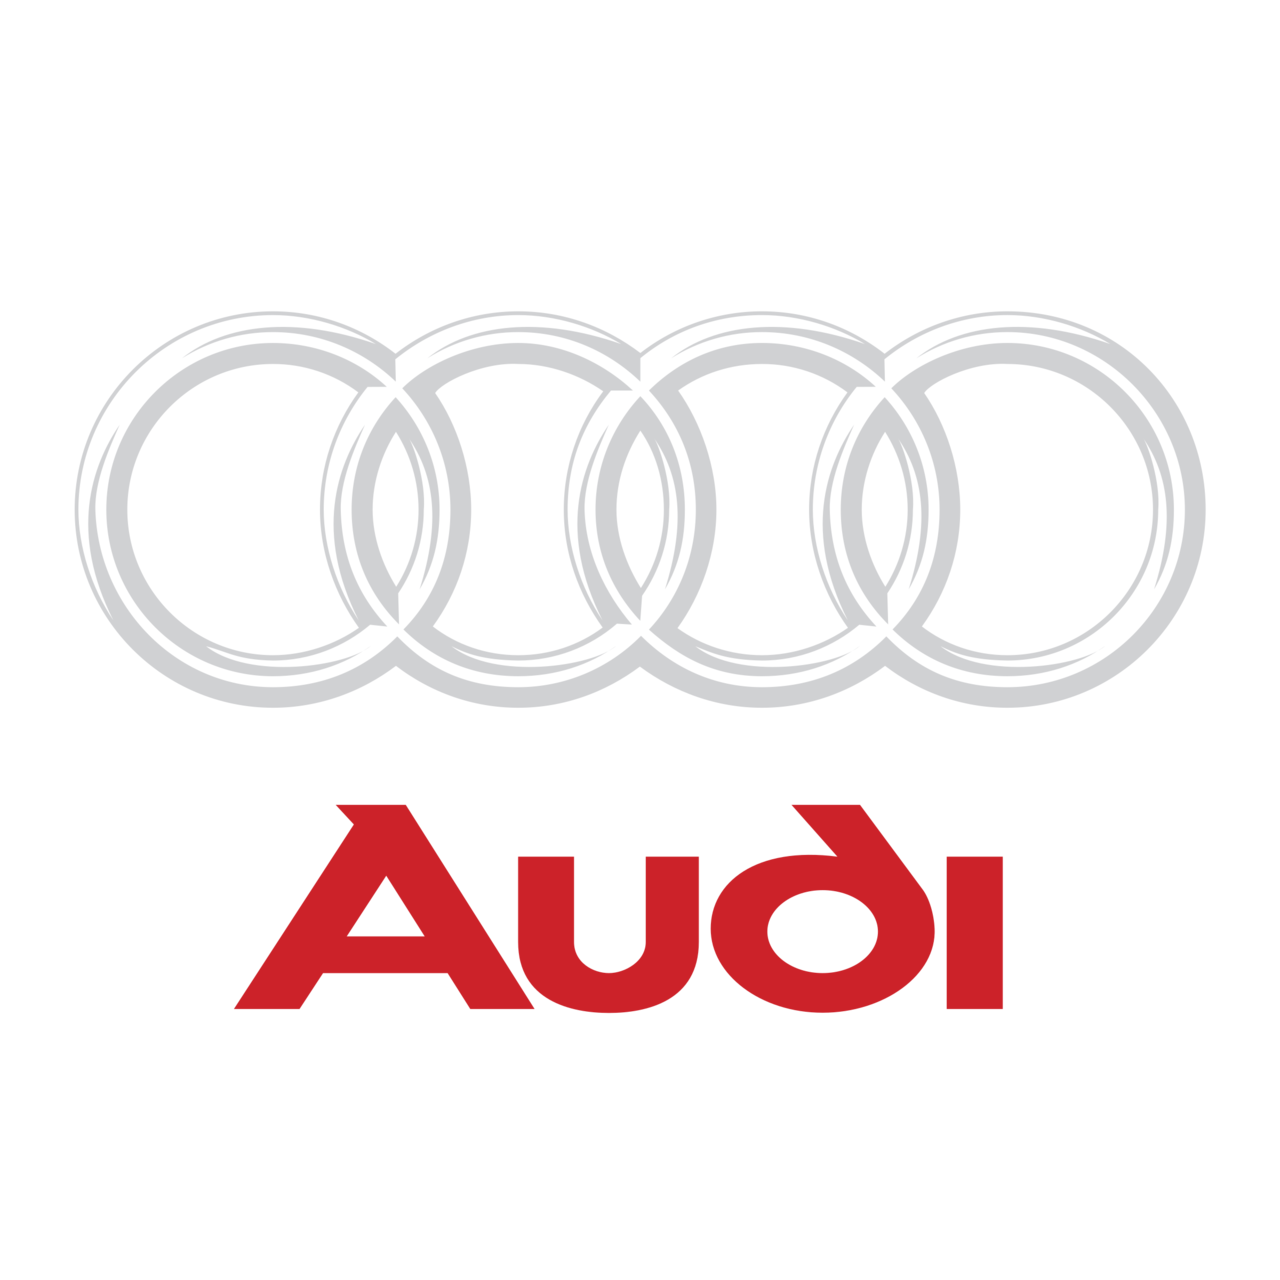 Audi logo 3